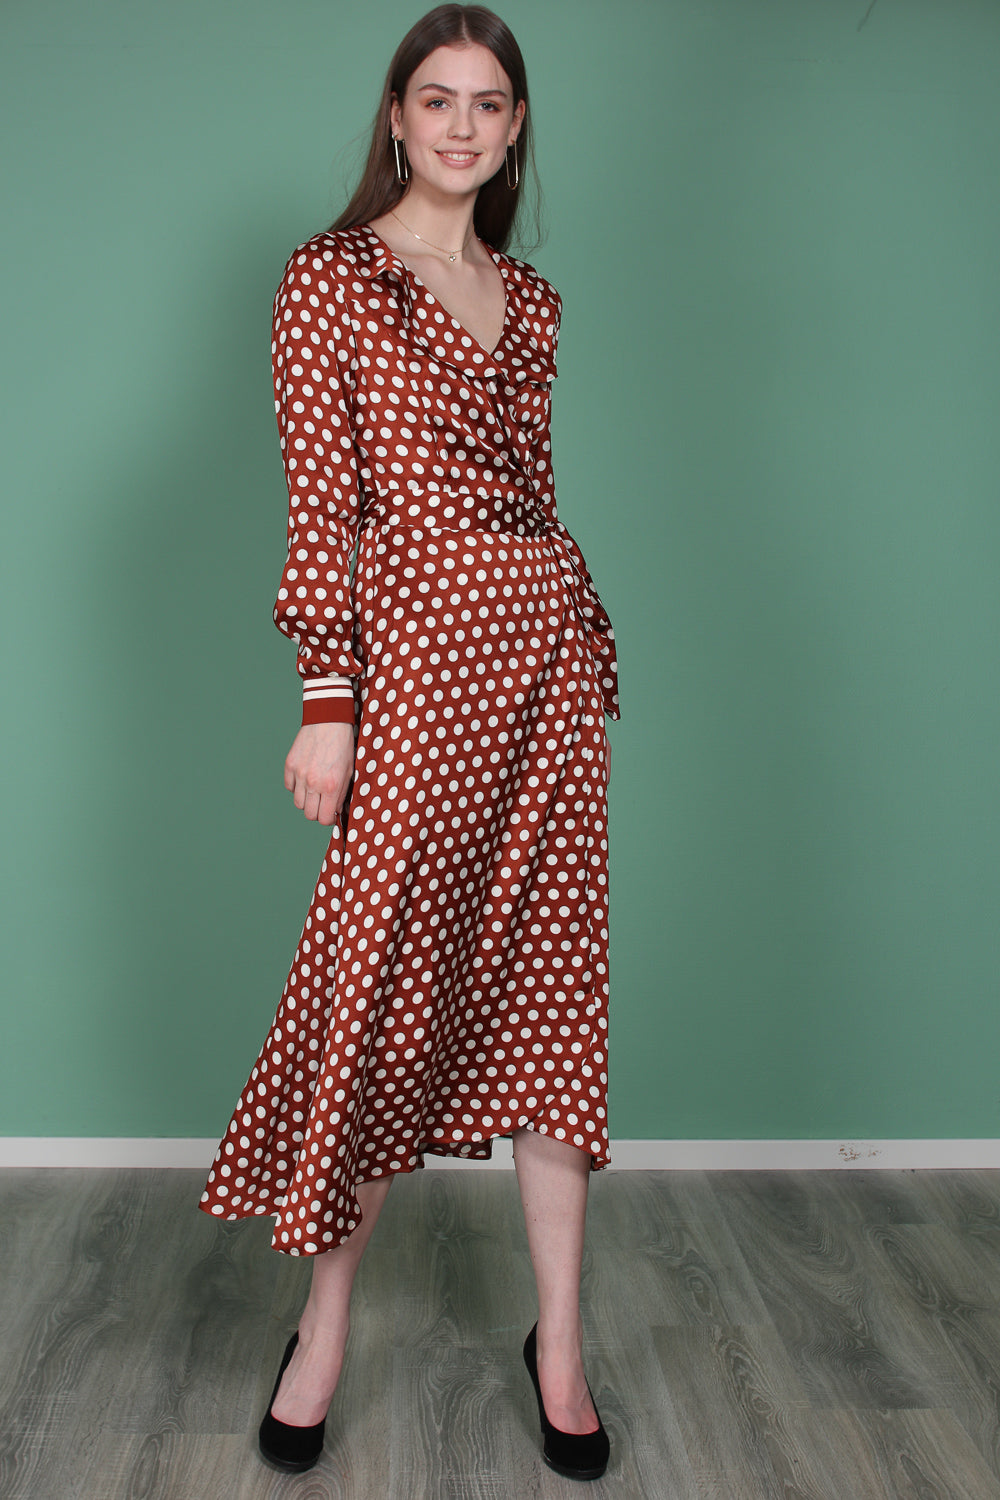 Spotty Wrap Dress - Rustic Brown - Second Female - Kjoler - VILLOID.no